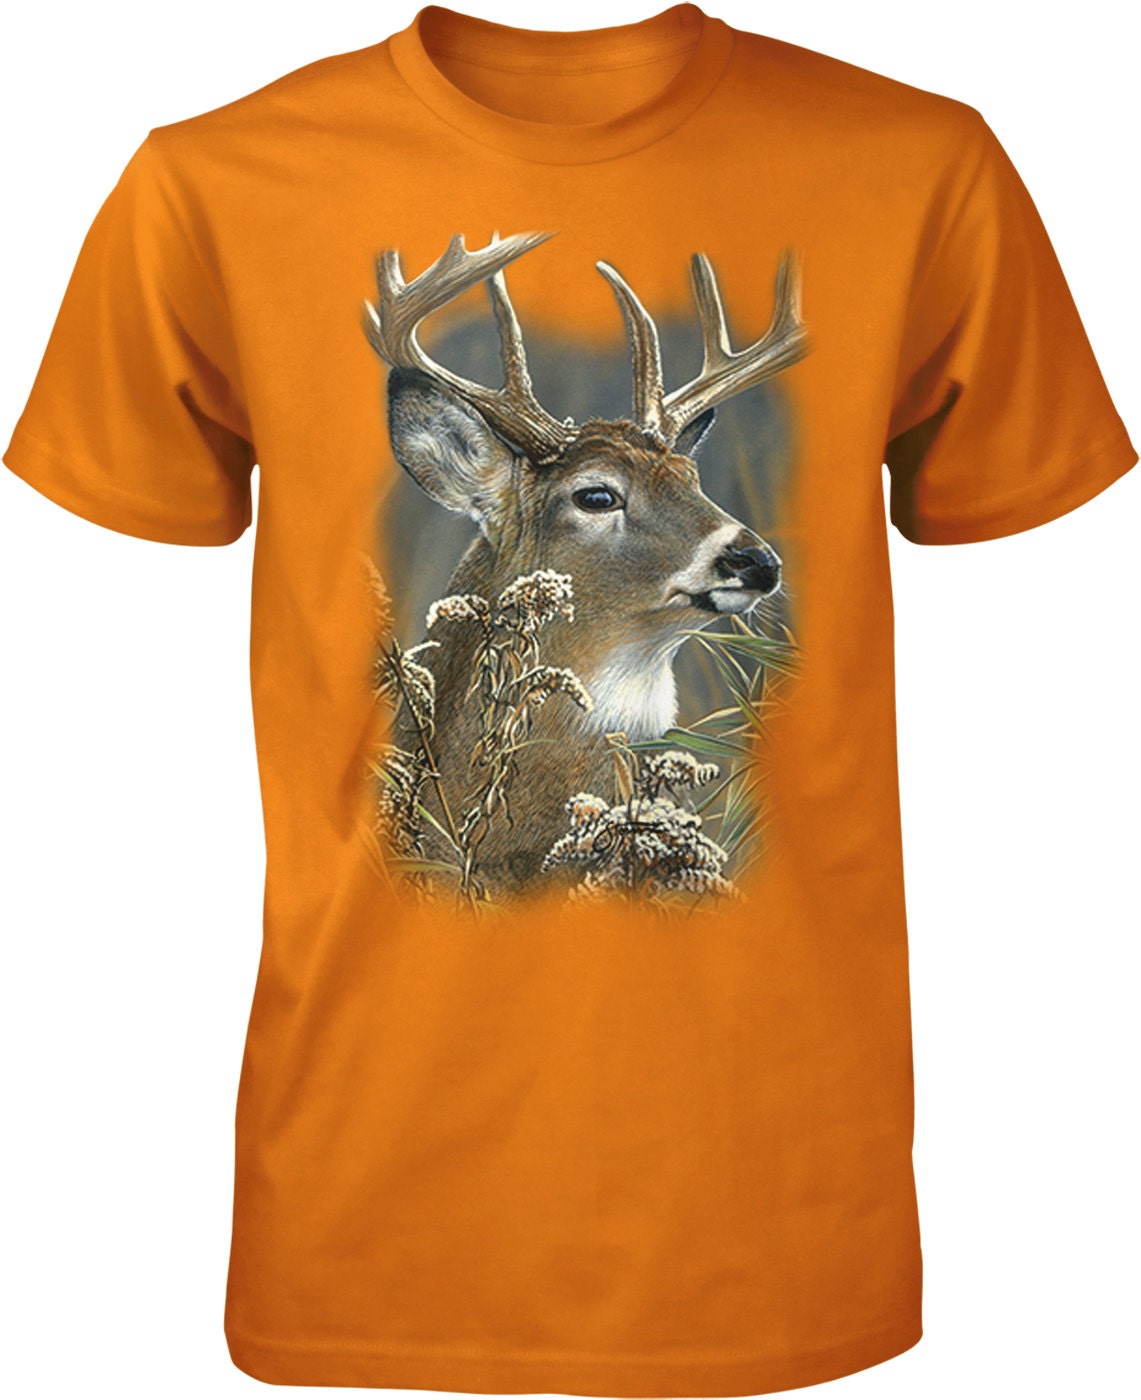 Big Buck Deer Hunting Hunter Men's T-shirt NOFO_00406 